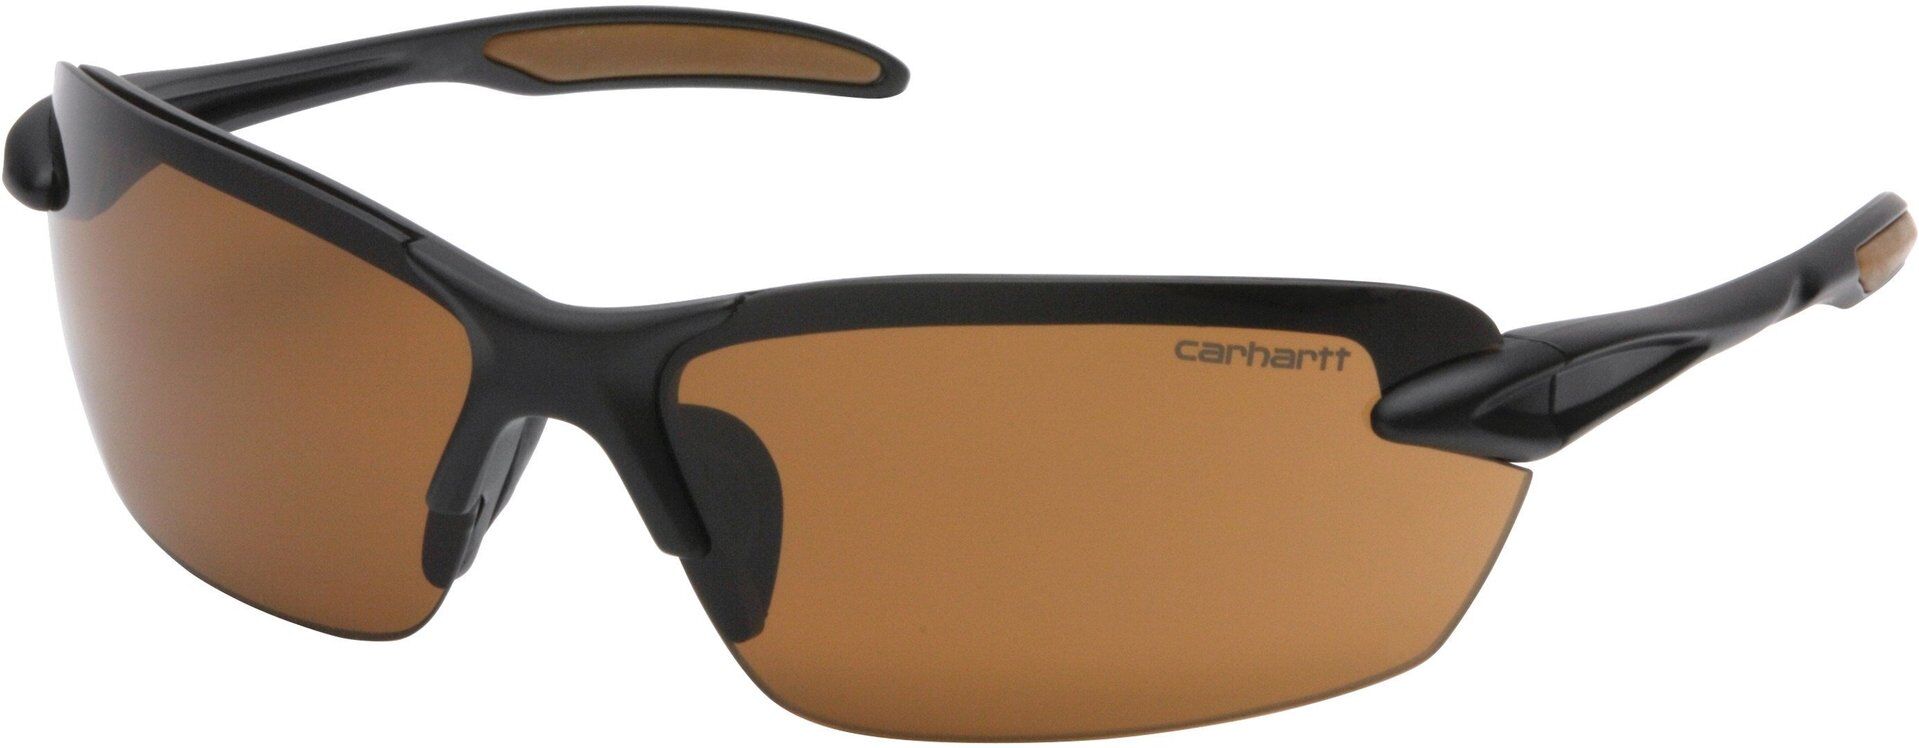 Carhartt Spokane Safety Glasses  - Brown